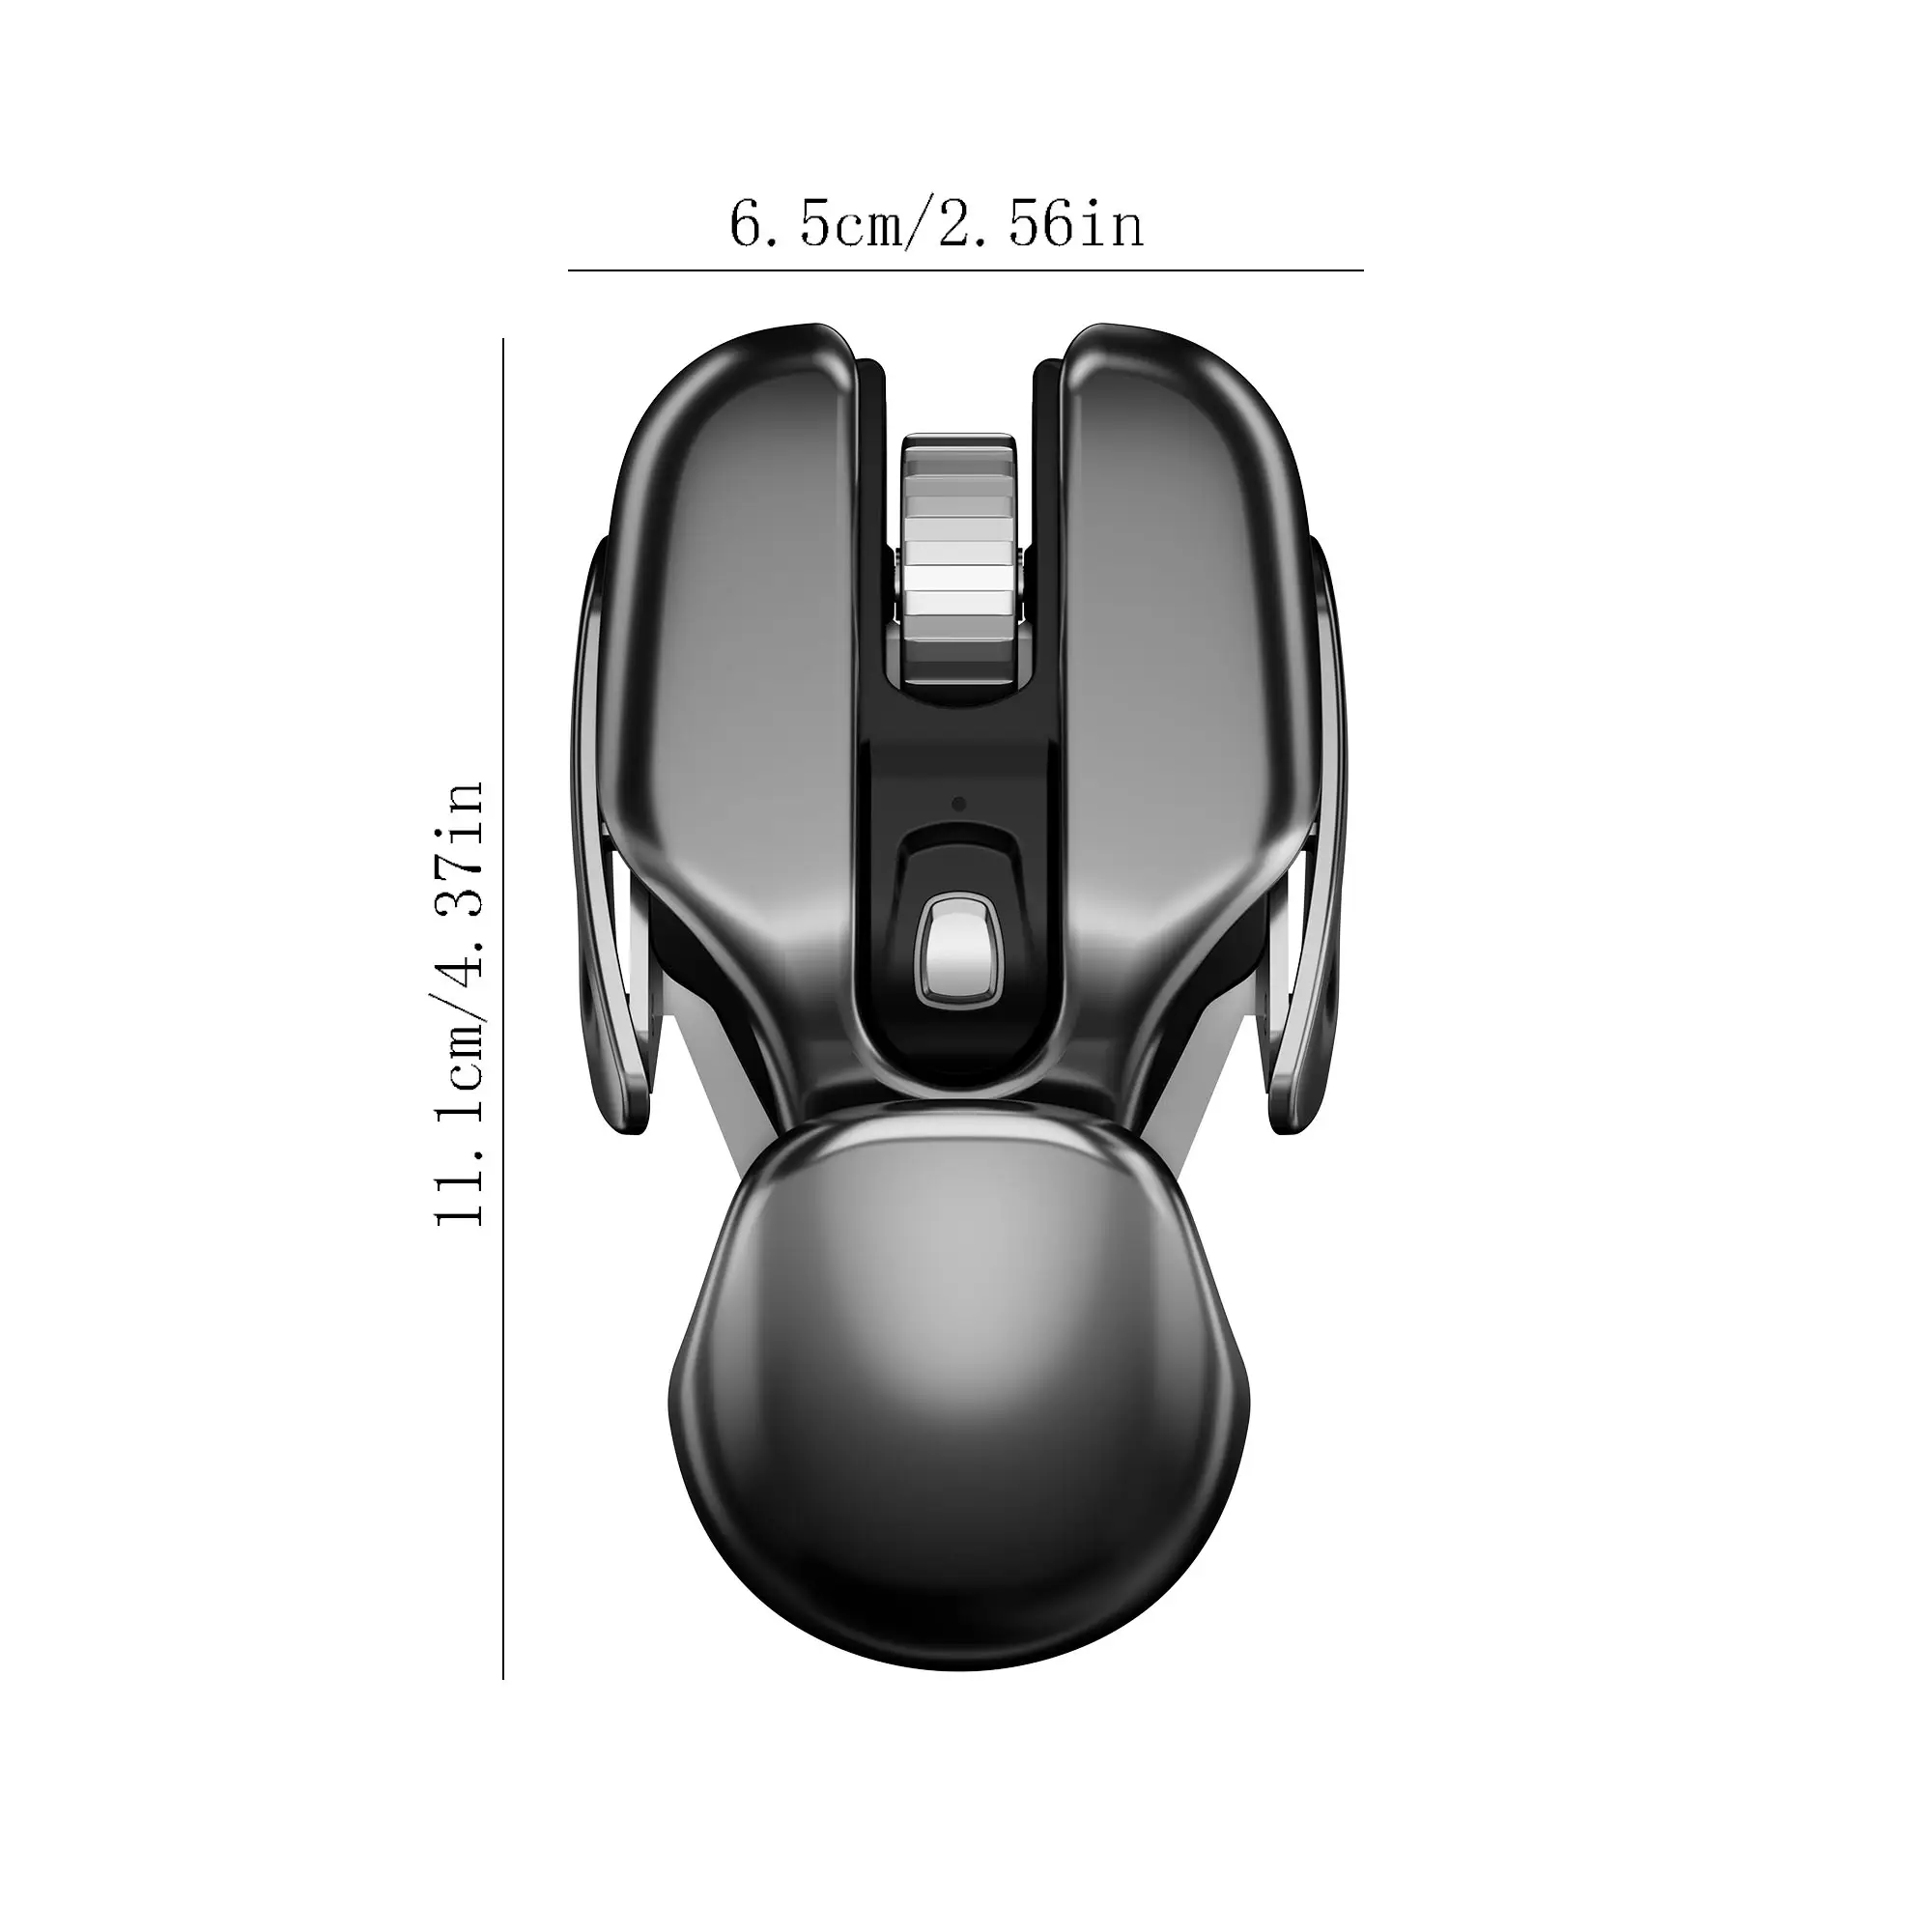 Ultimo mouse in metallo 2.4G USB ricaricabile 1600DPI mouse per computer mouse in metallo rotella trackball mouse